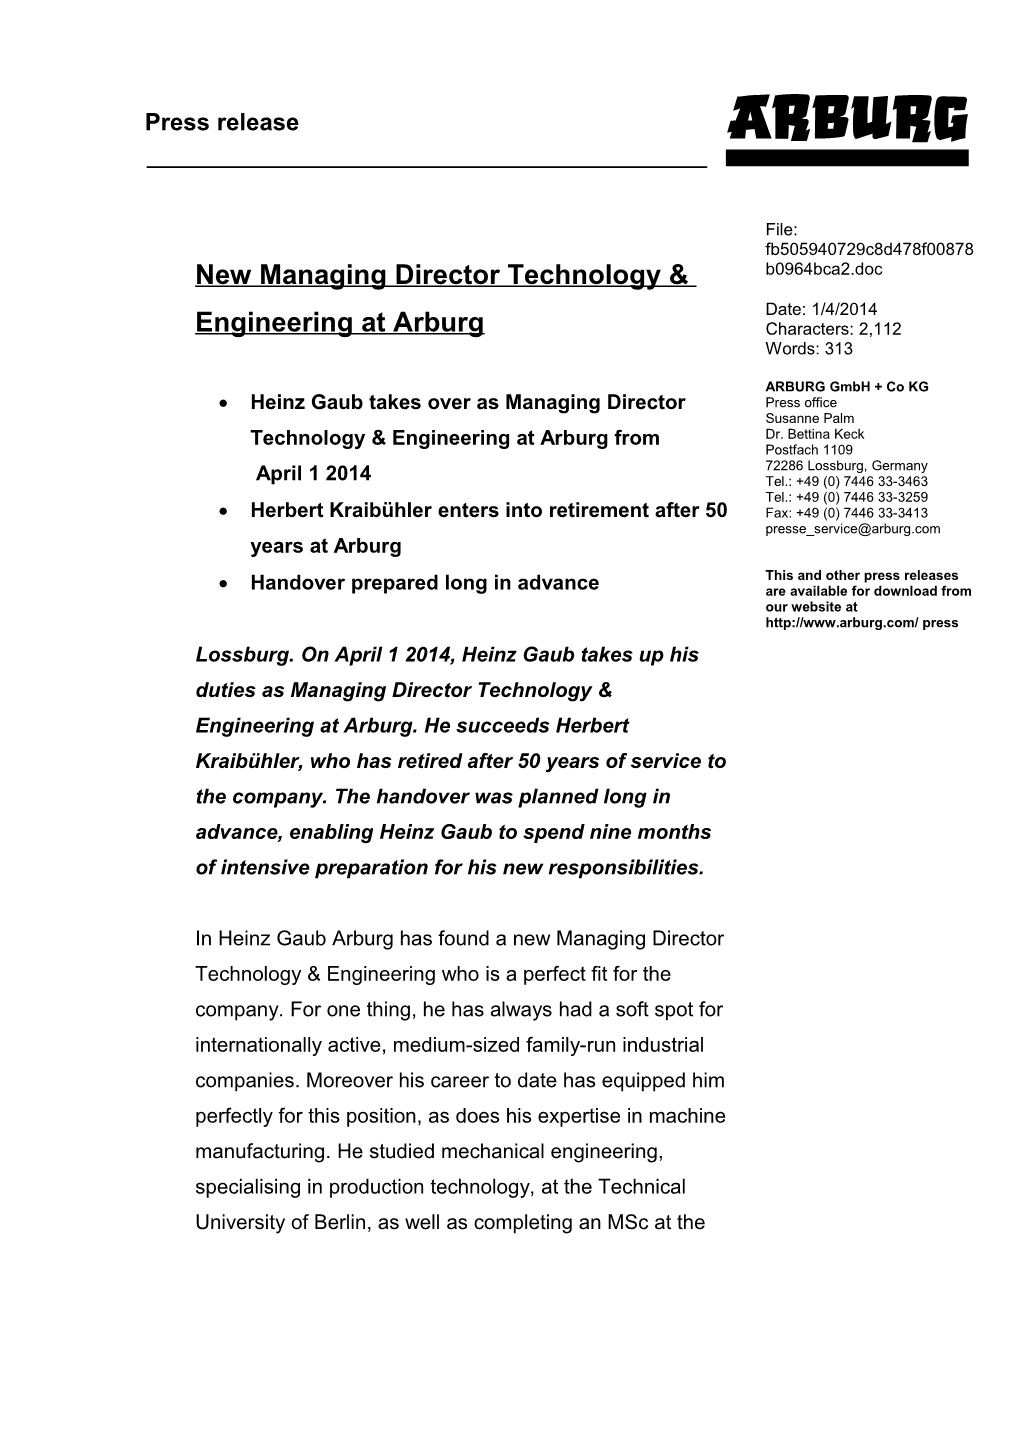 New Managing Director Technology & Engineering at Arburg